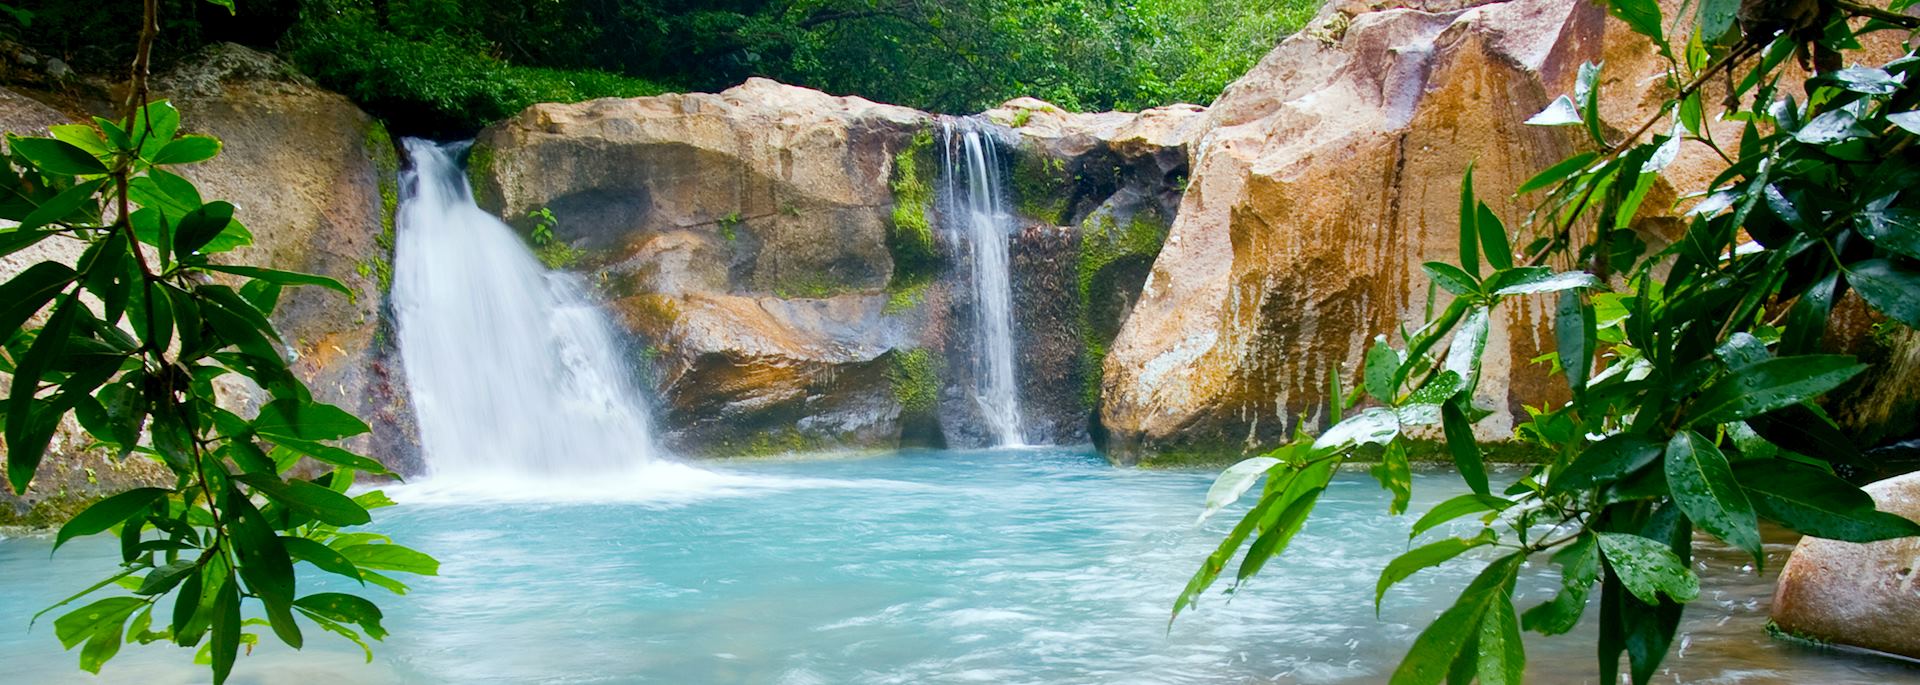 Waterfall at Rincón de la Vieja